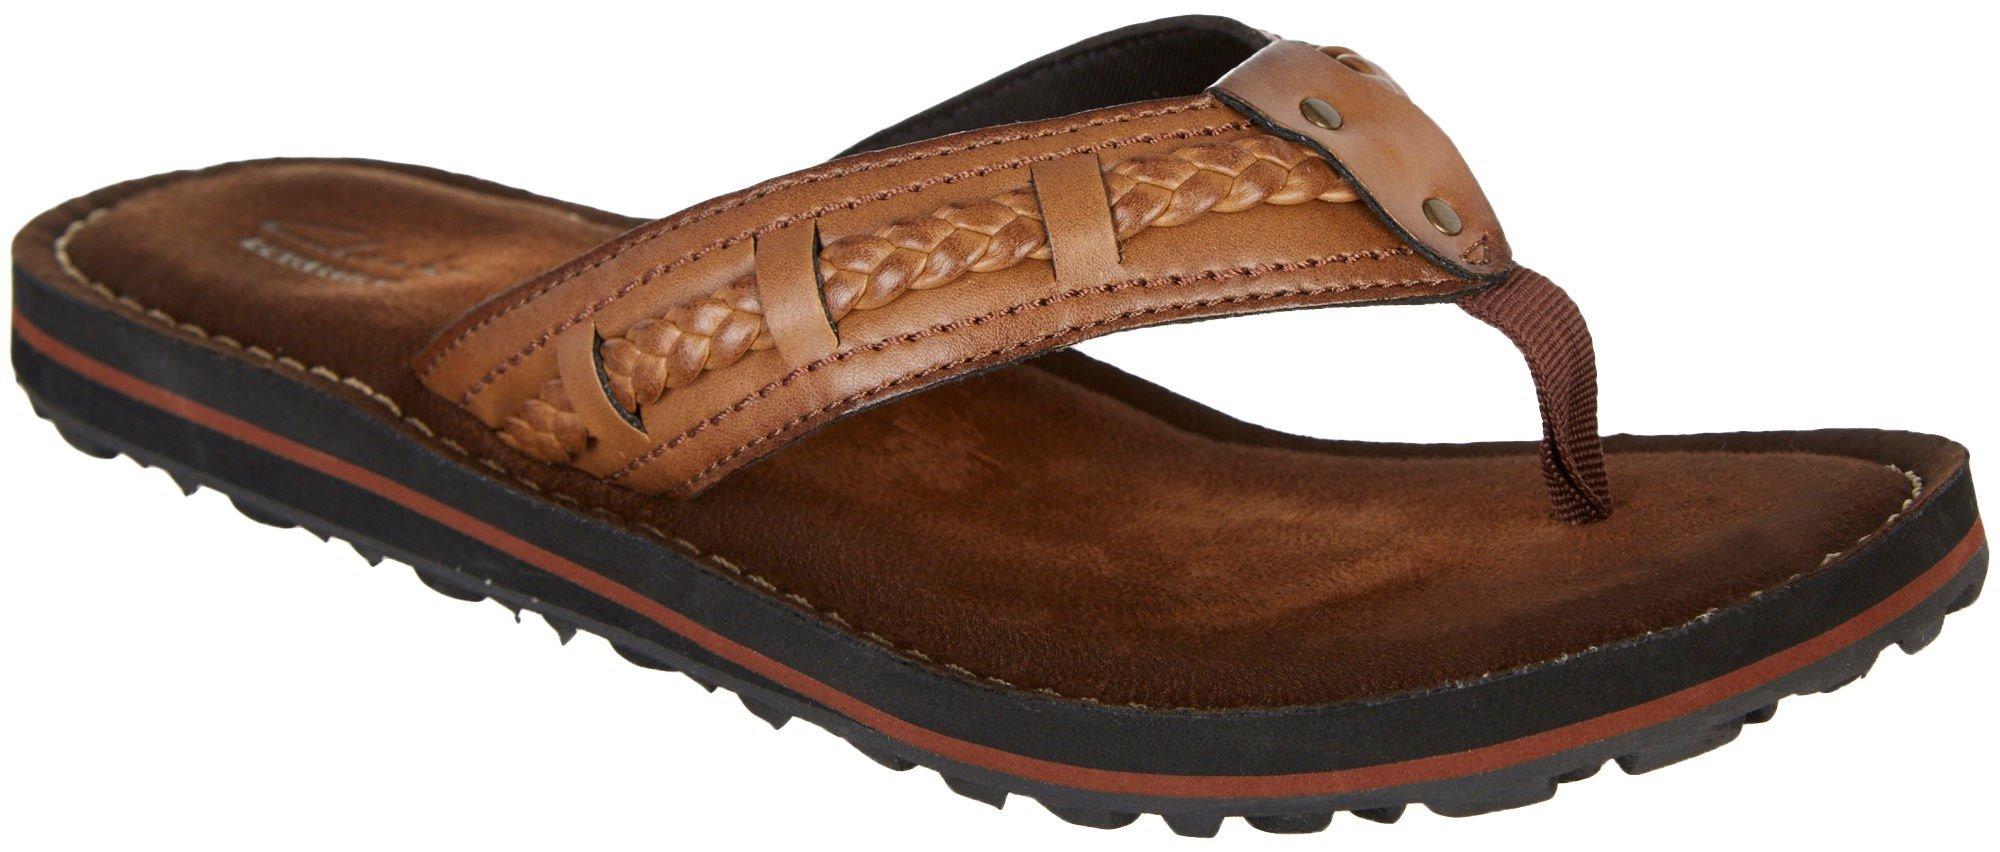 clarks fenner nerice flip flop sandals